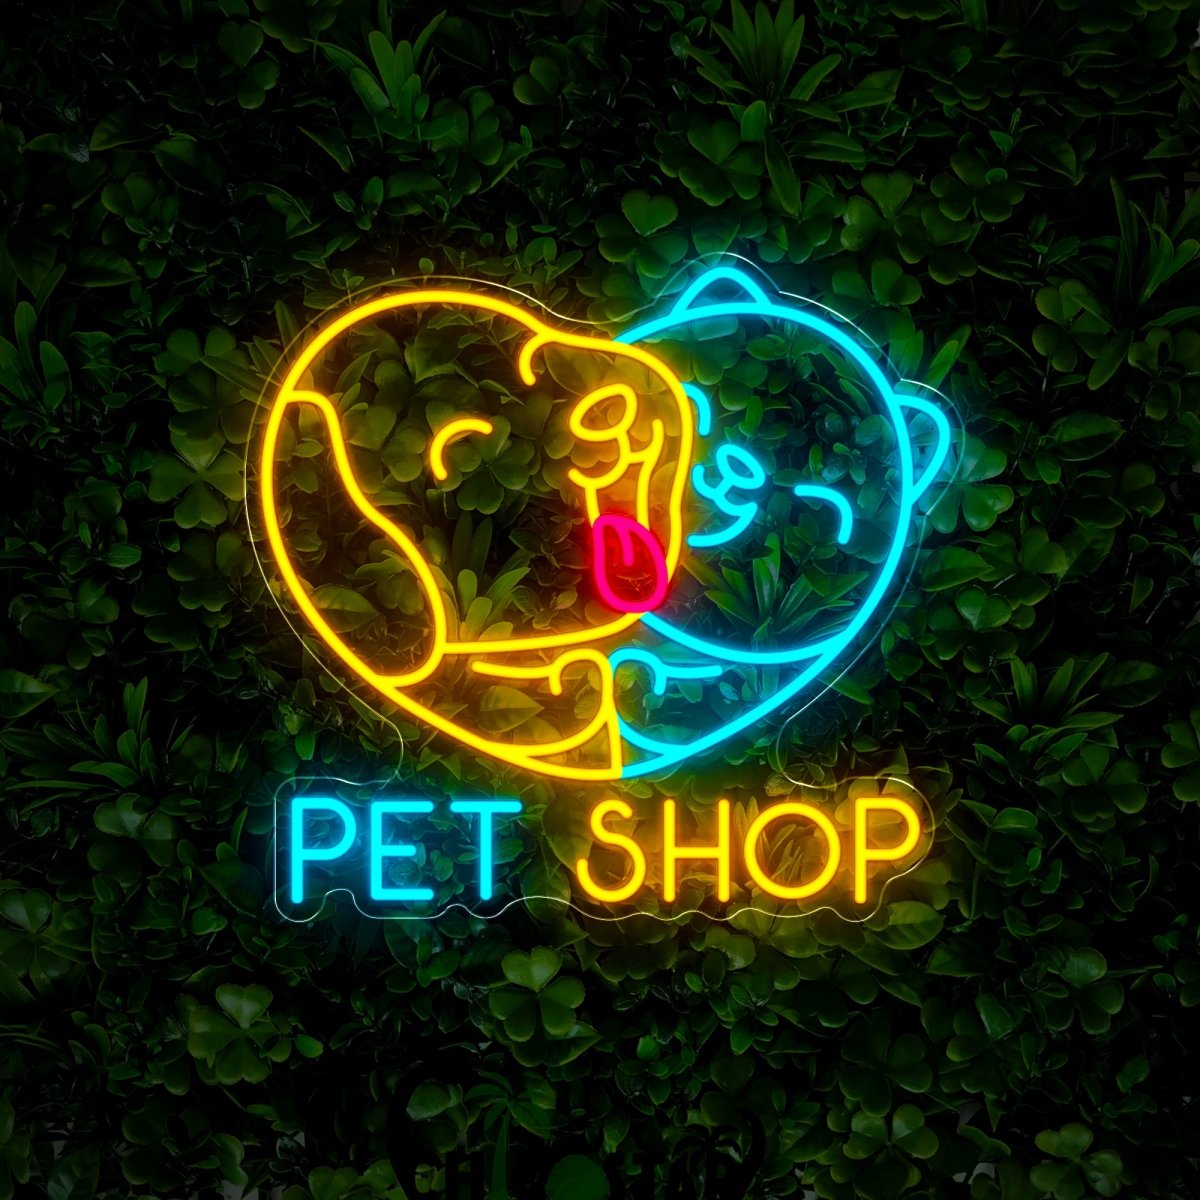 Pet Shop Neon Sign - Reels Custom